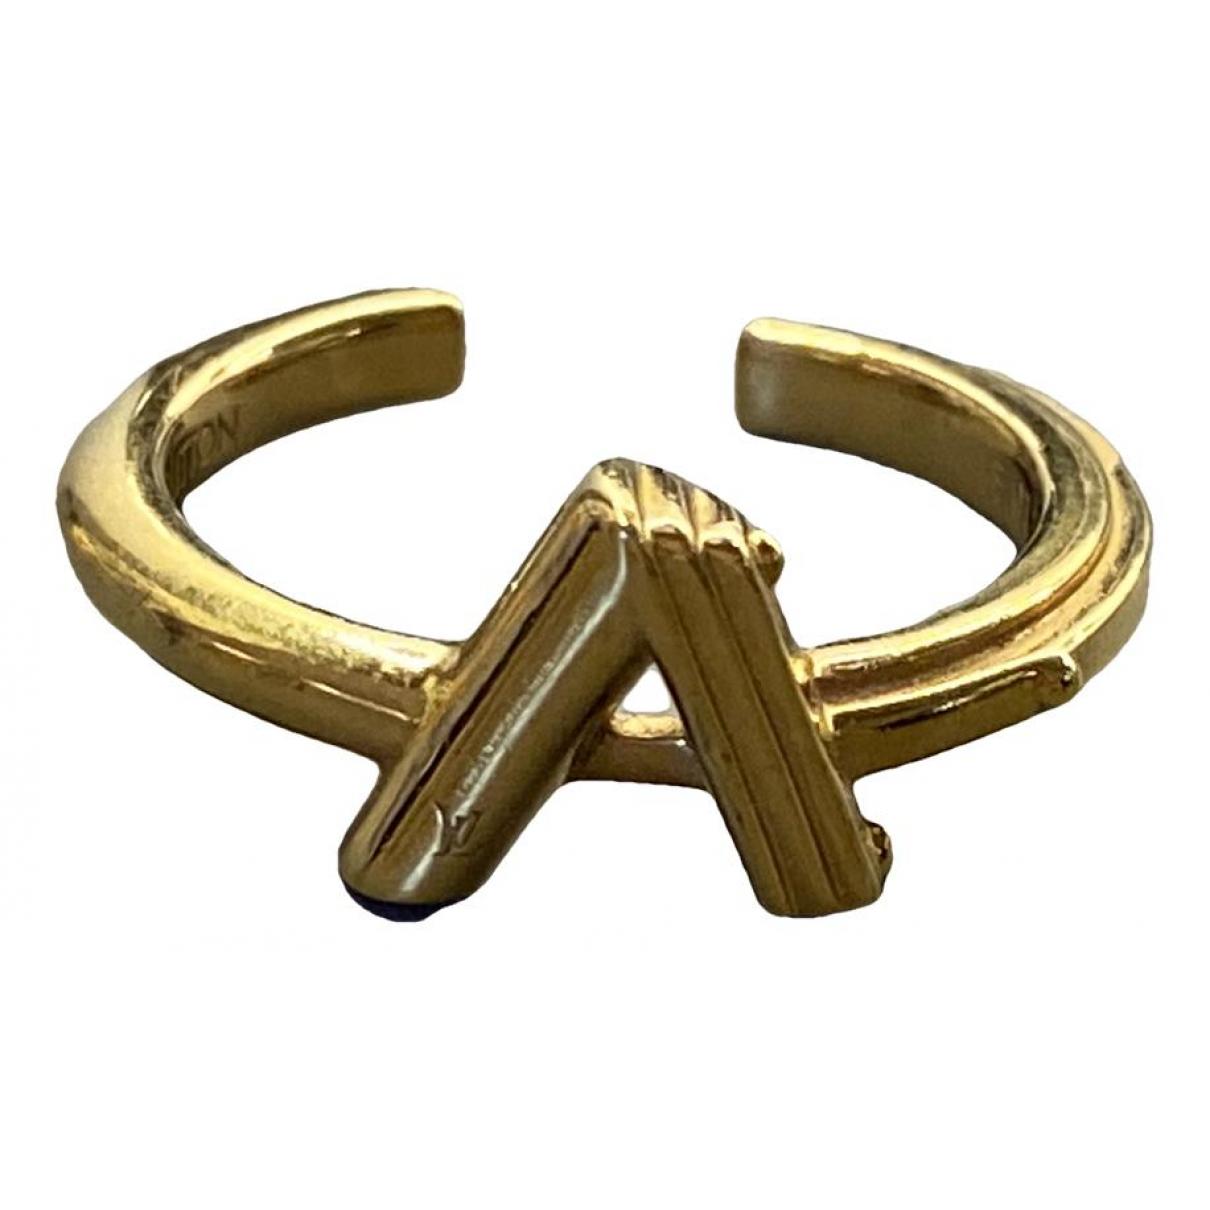 Louis Vuitton Nanogram Ring (M00216, M00214, M00211, M00217, M00210, M00213)